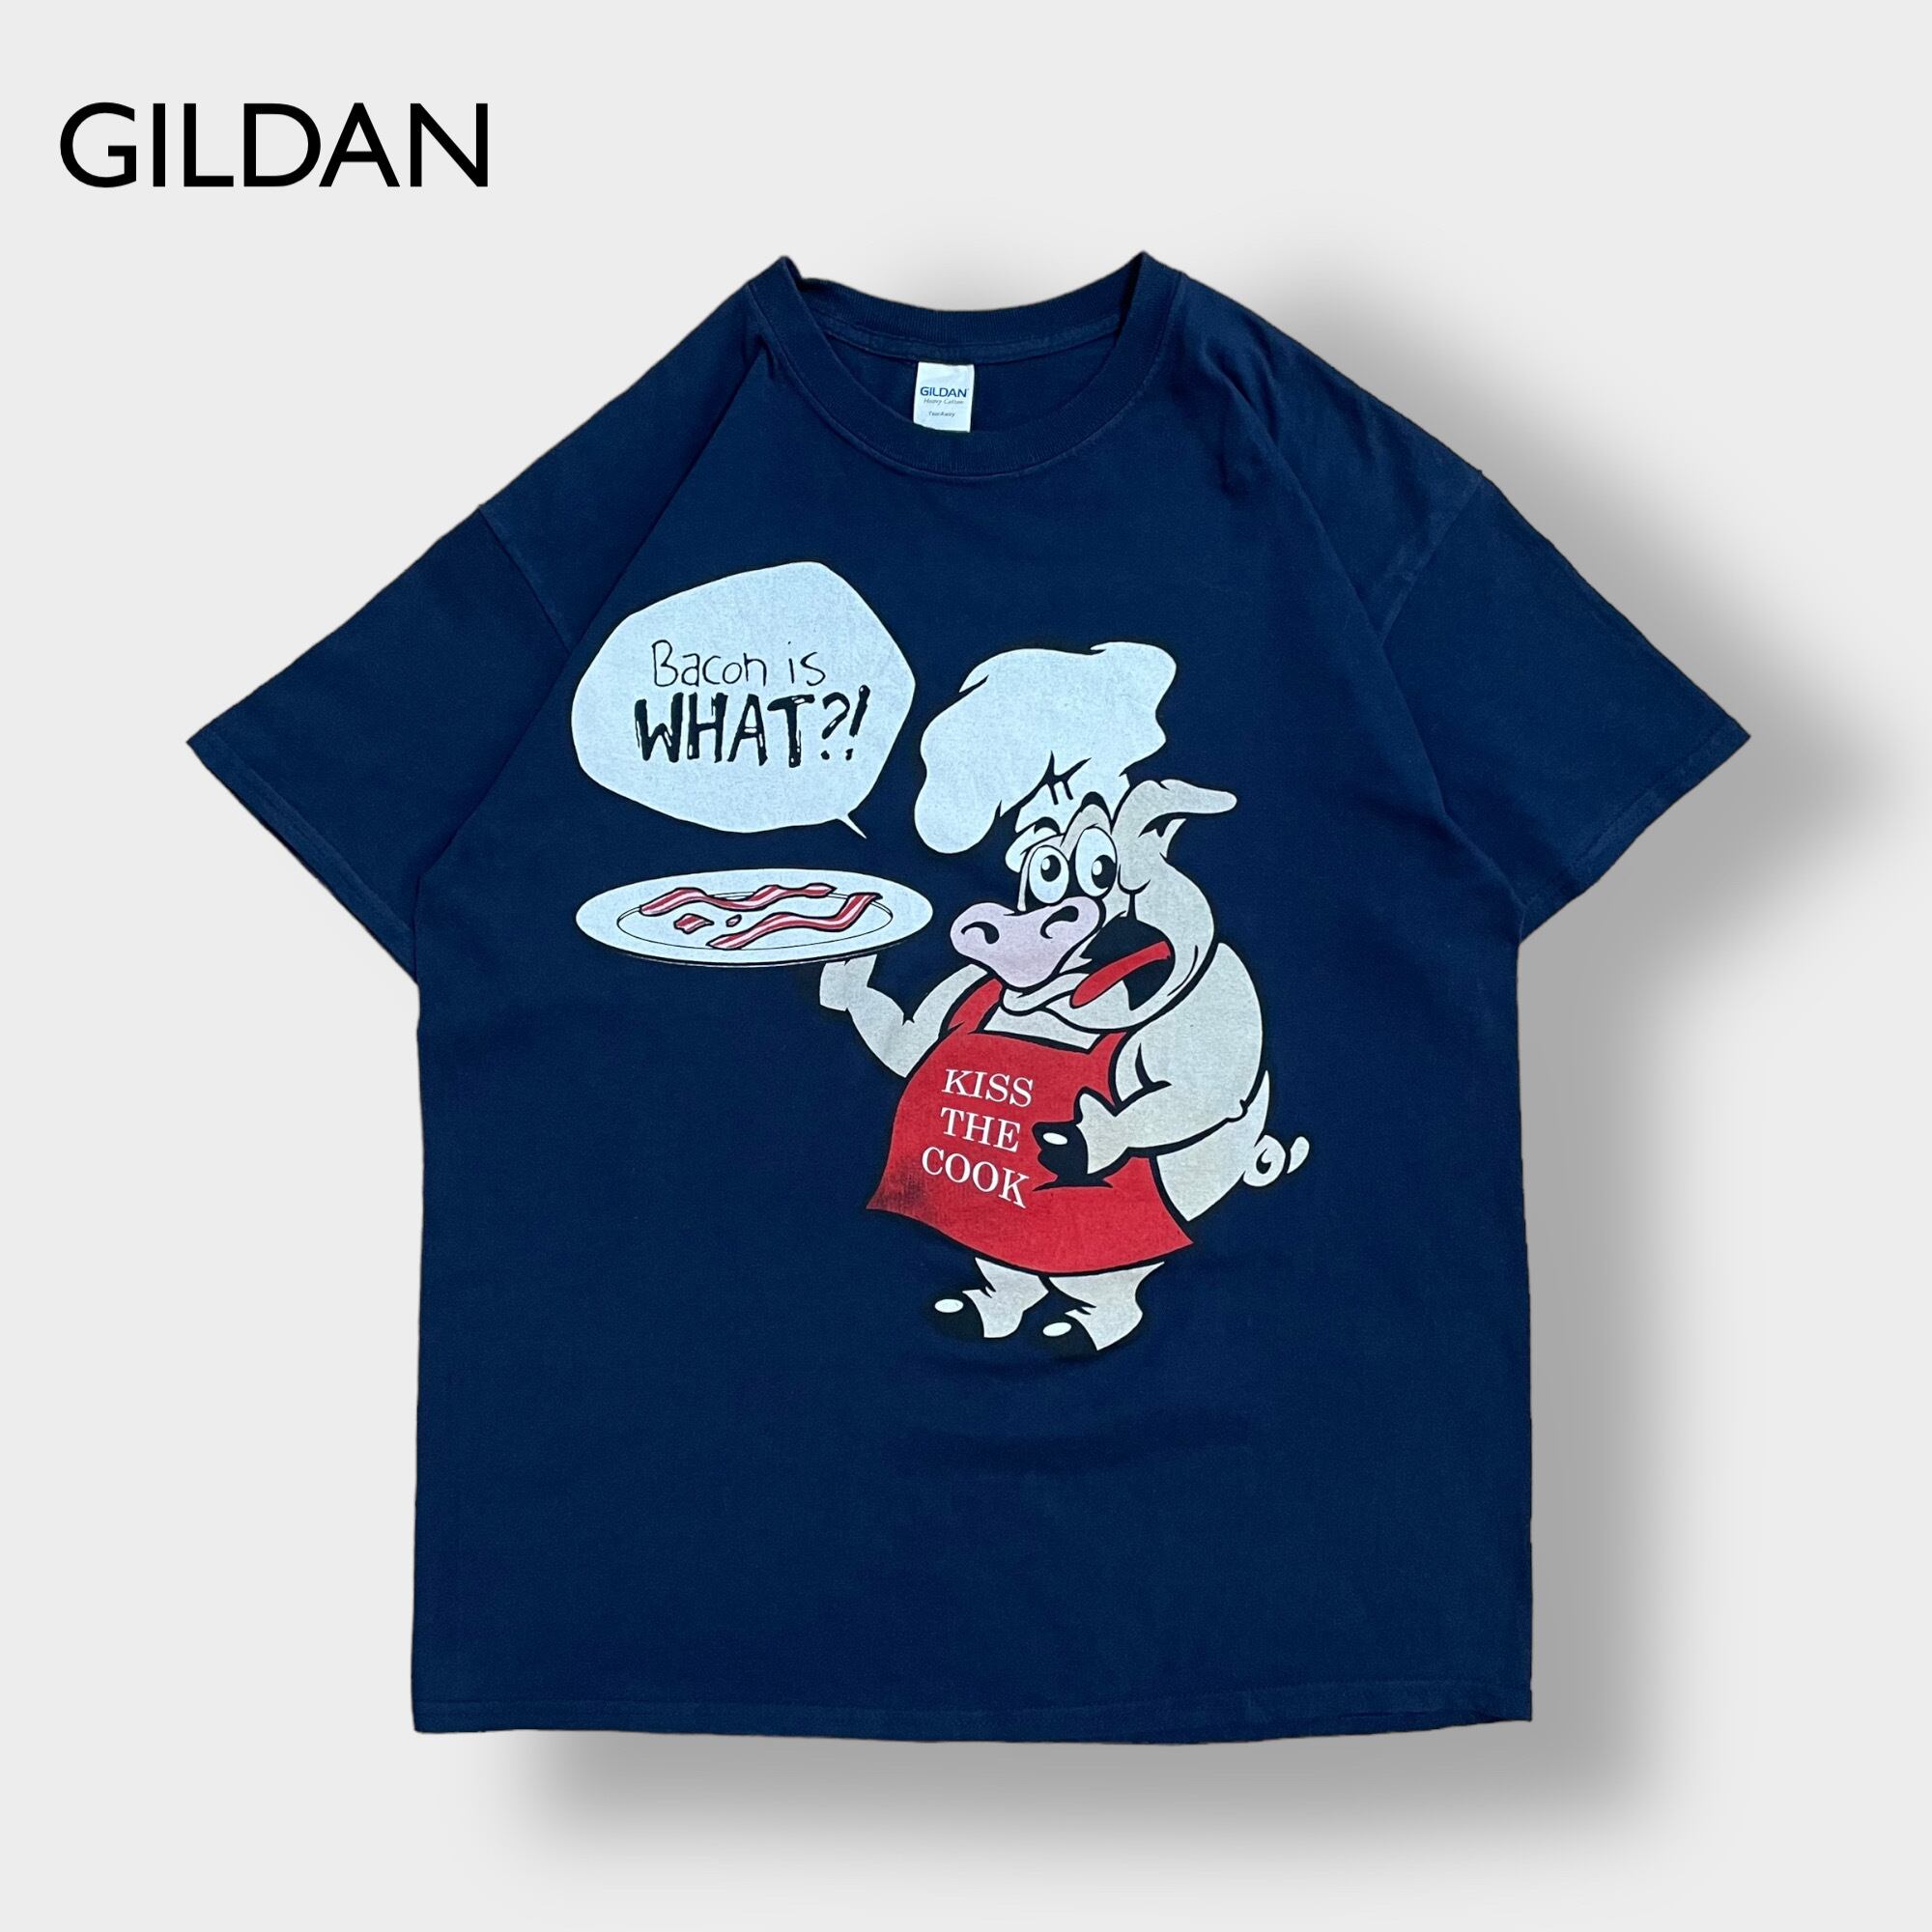 GILDAN】プリント イラスト Tシャツ L 半袖 ネイビー クッキング